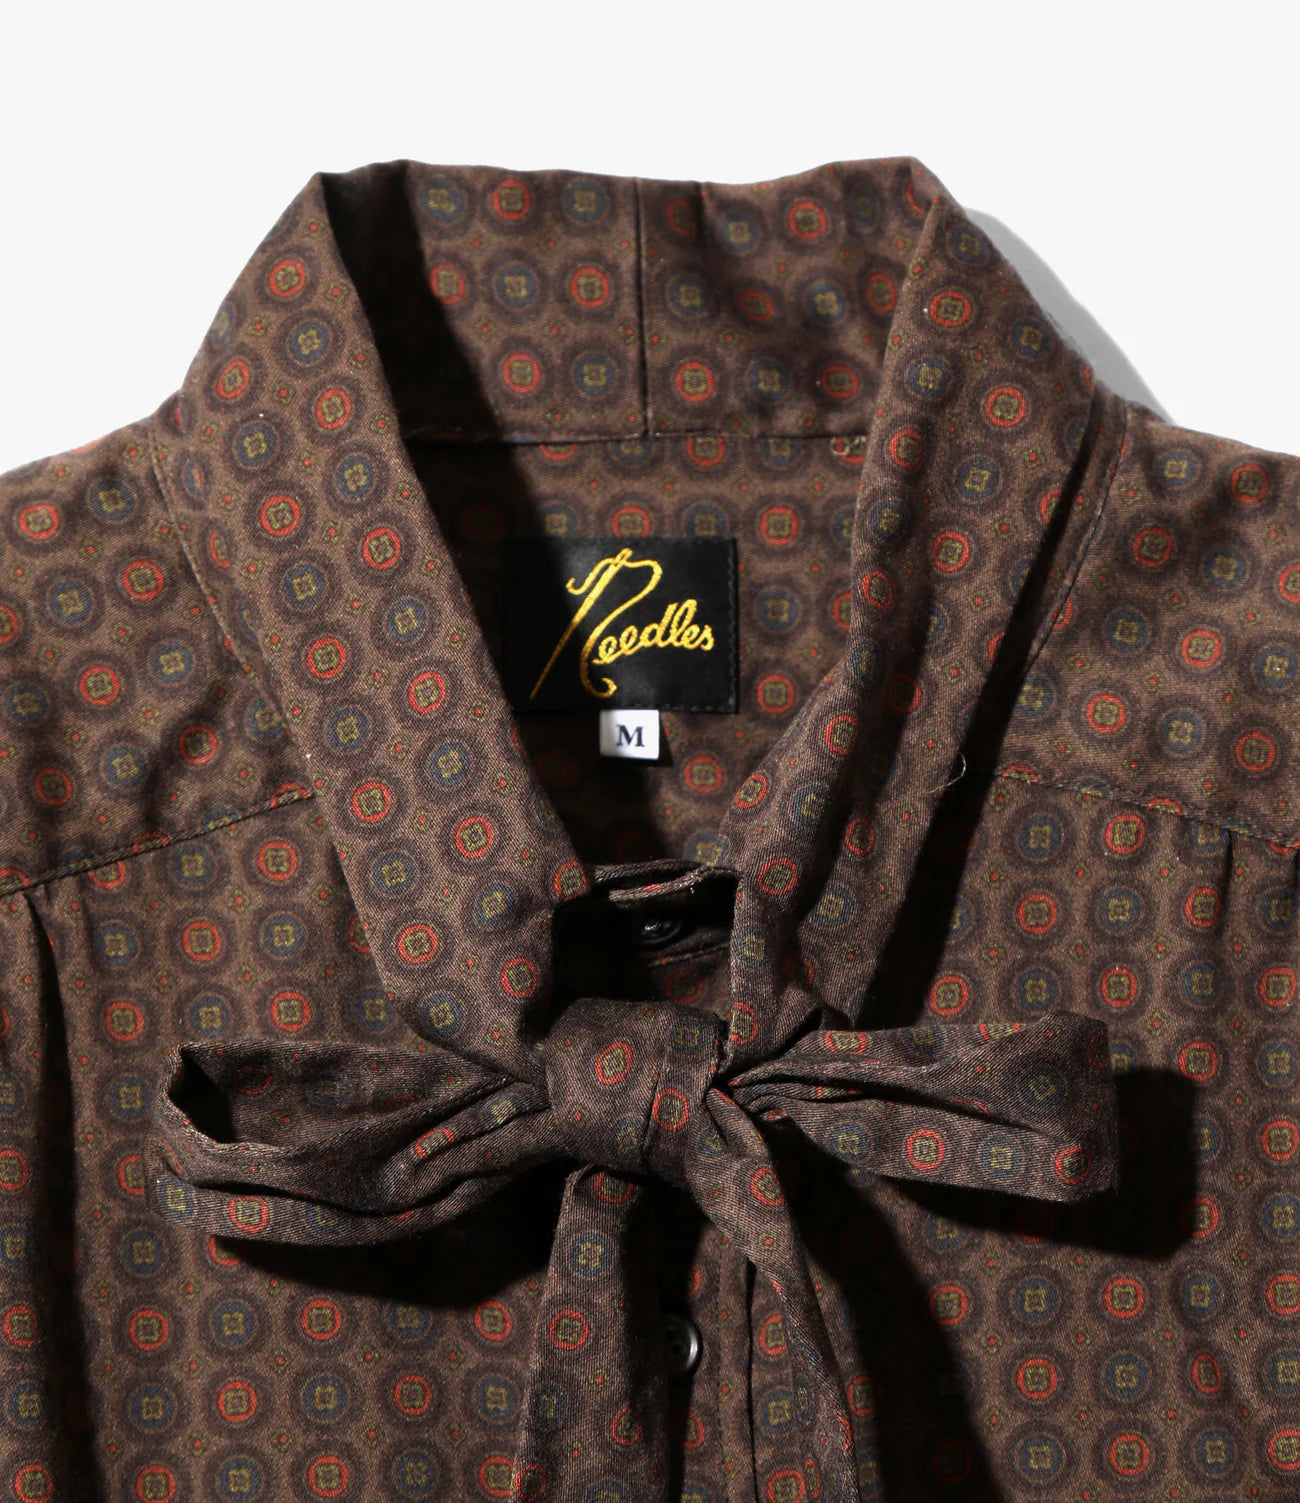 Needles Ascot Collar EDW Shirt - Cotton Sateen / Printed - Brown/Fine Pattern